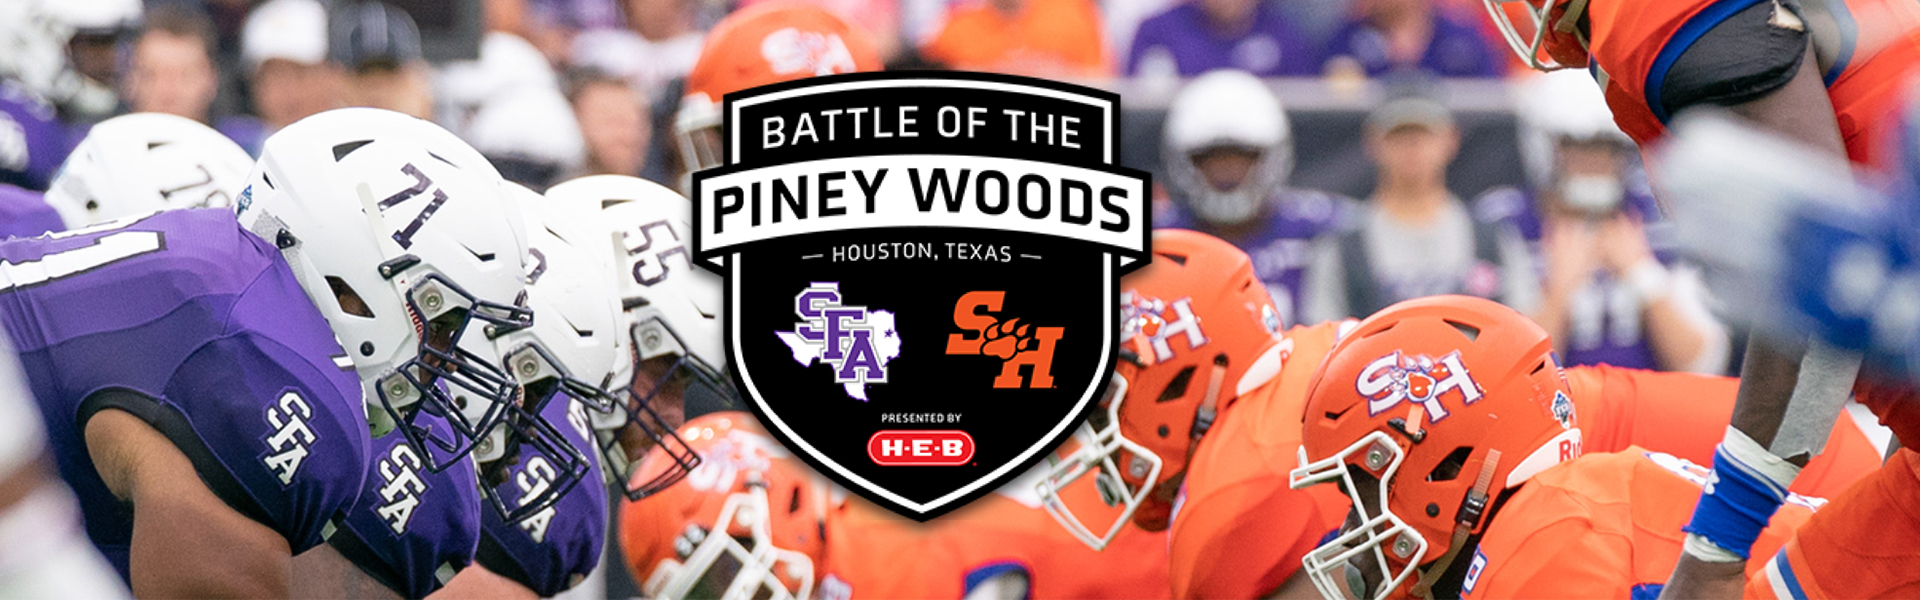 Battle of the Piney Woods SFA vs SHSU NRG Park